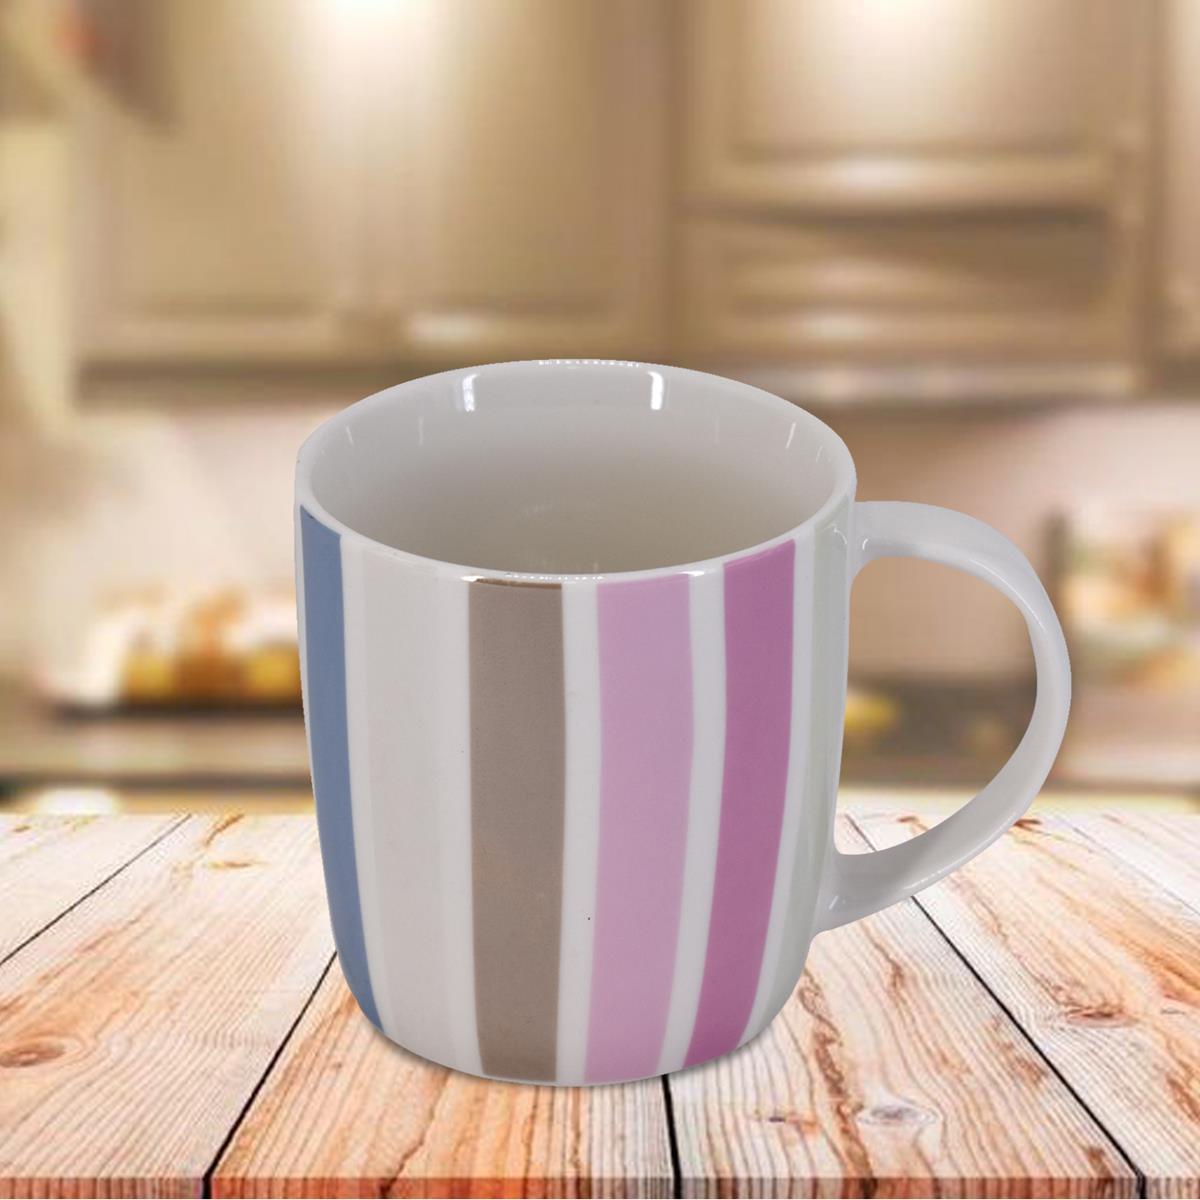 Kookee Ceramic Coffee or Tea Mug with handle for Office, Home or Gifting - 325ml (BPM3758-A)